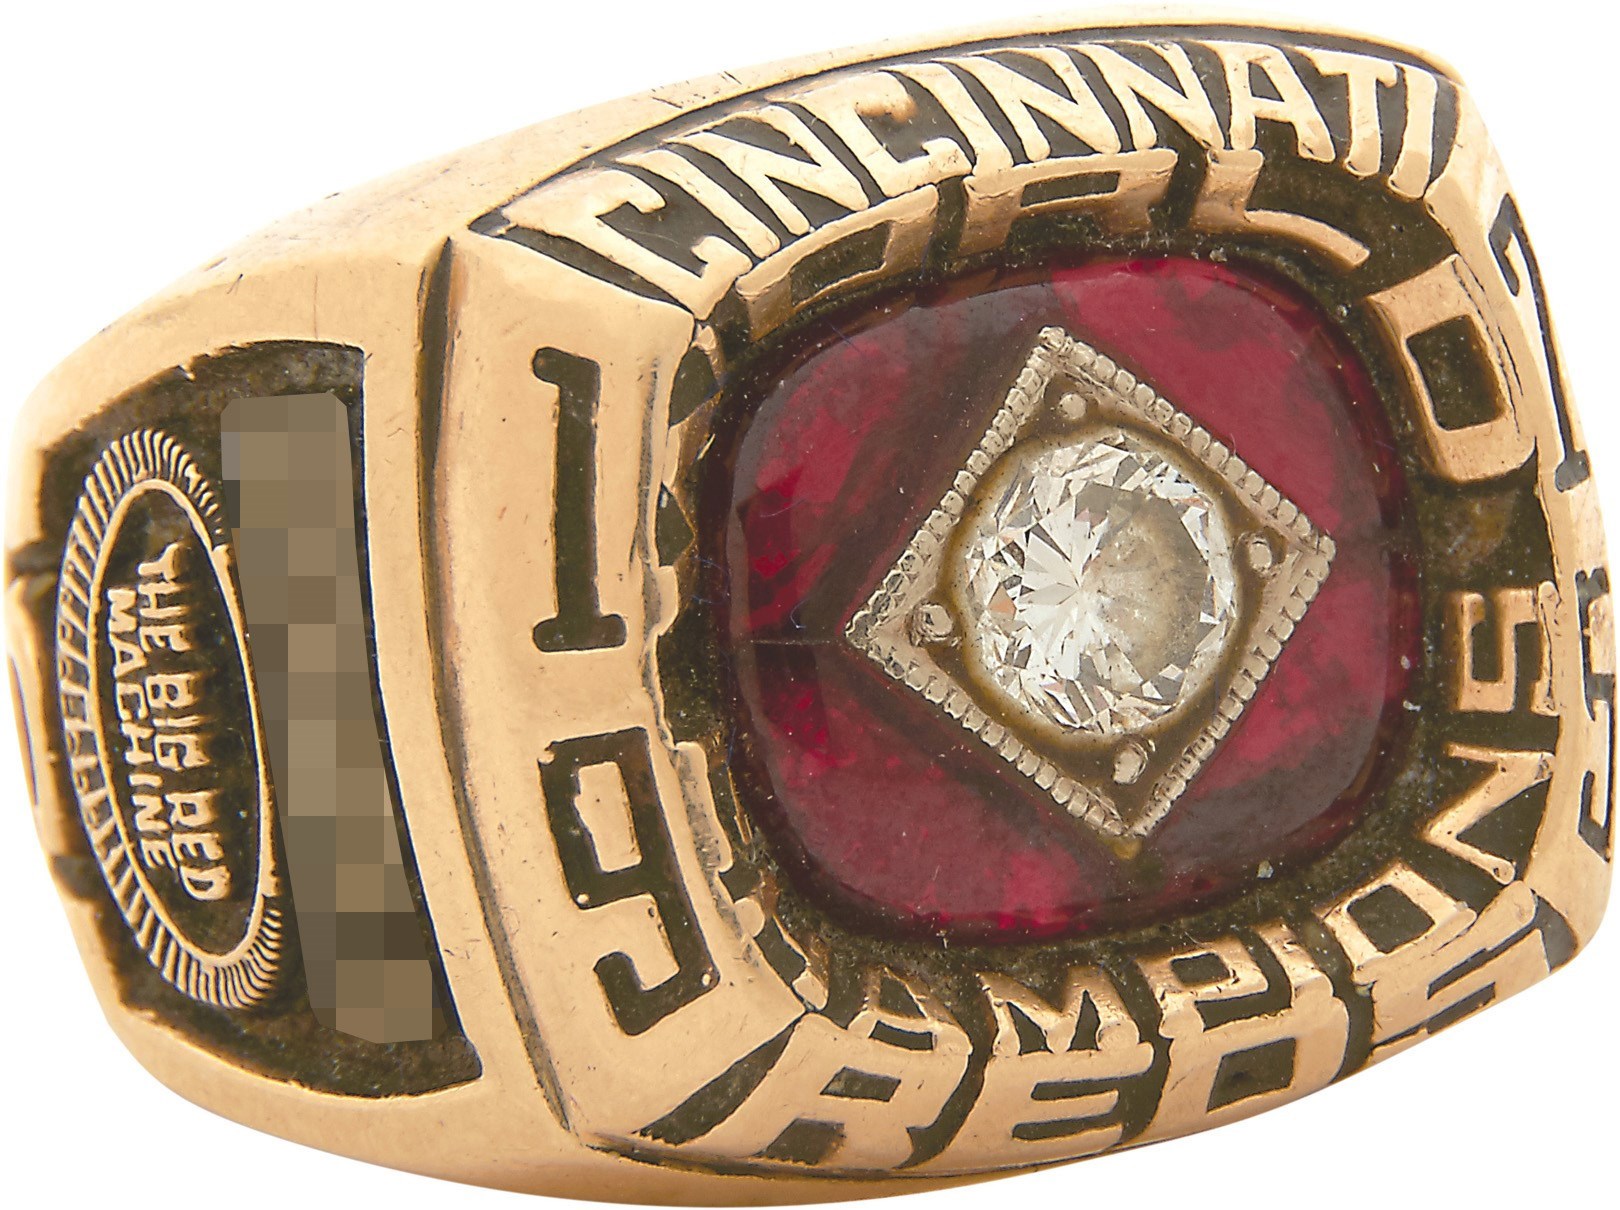 Pete Rose & Cincinnati Reds - 1975 Cincinnati Reds World Series Championship Ring